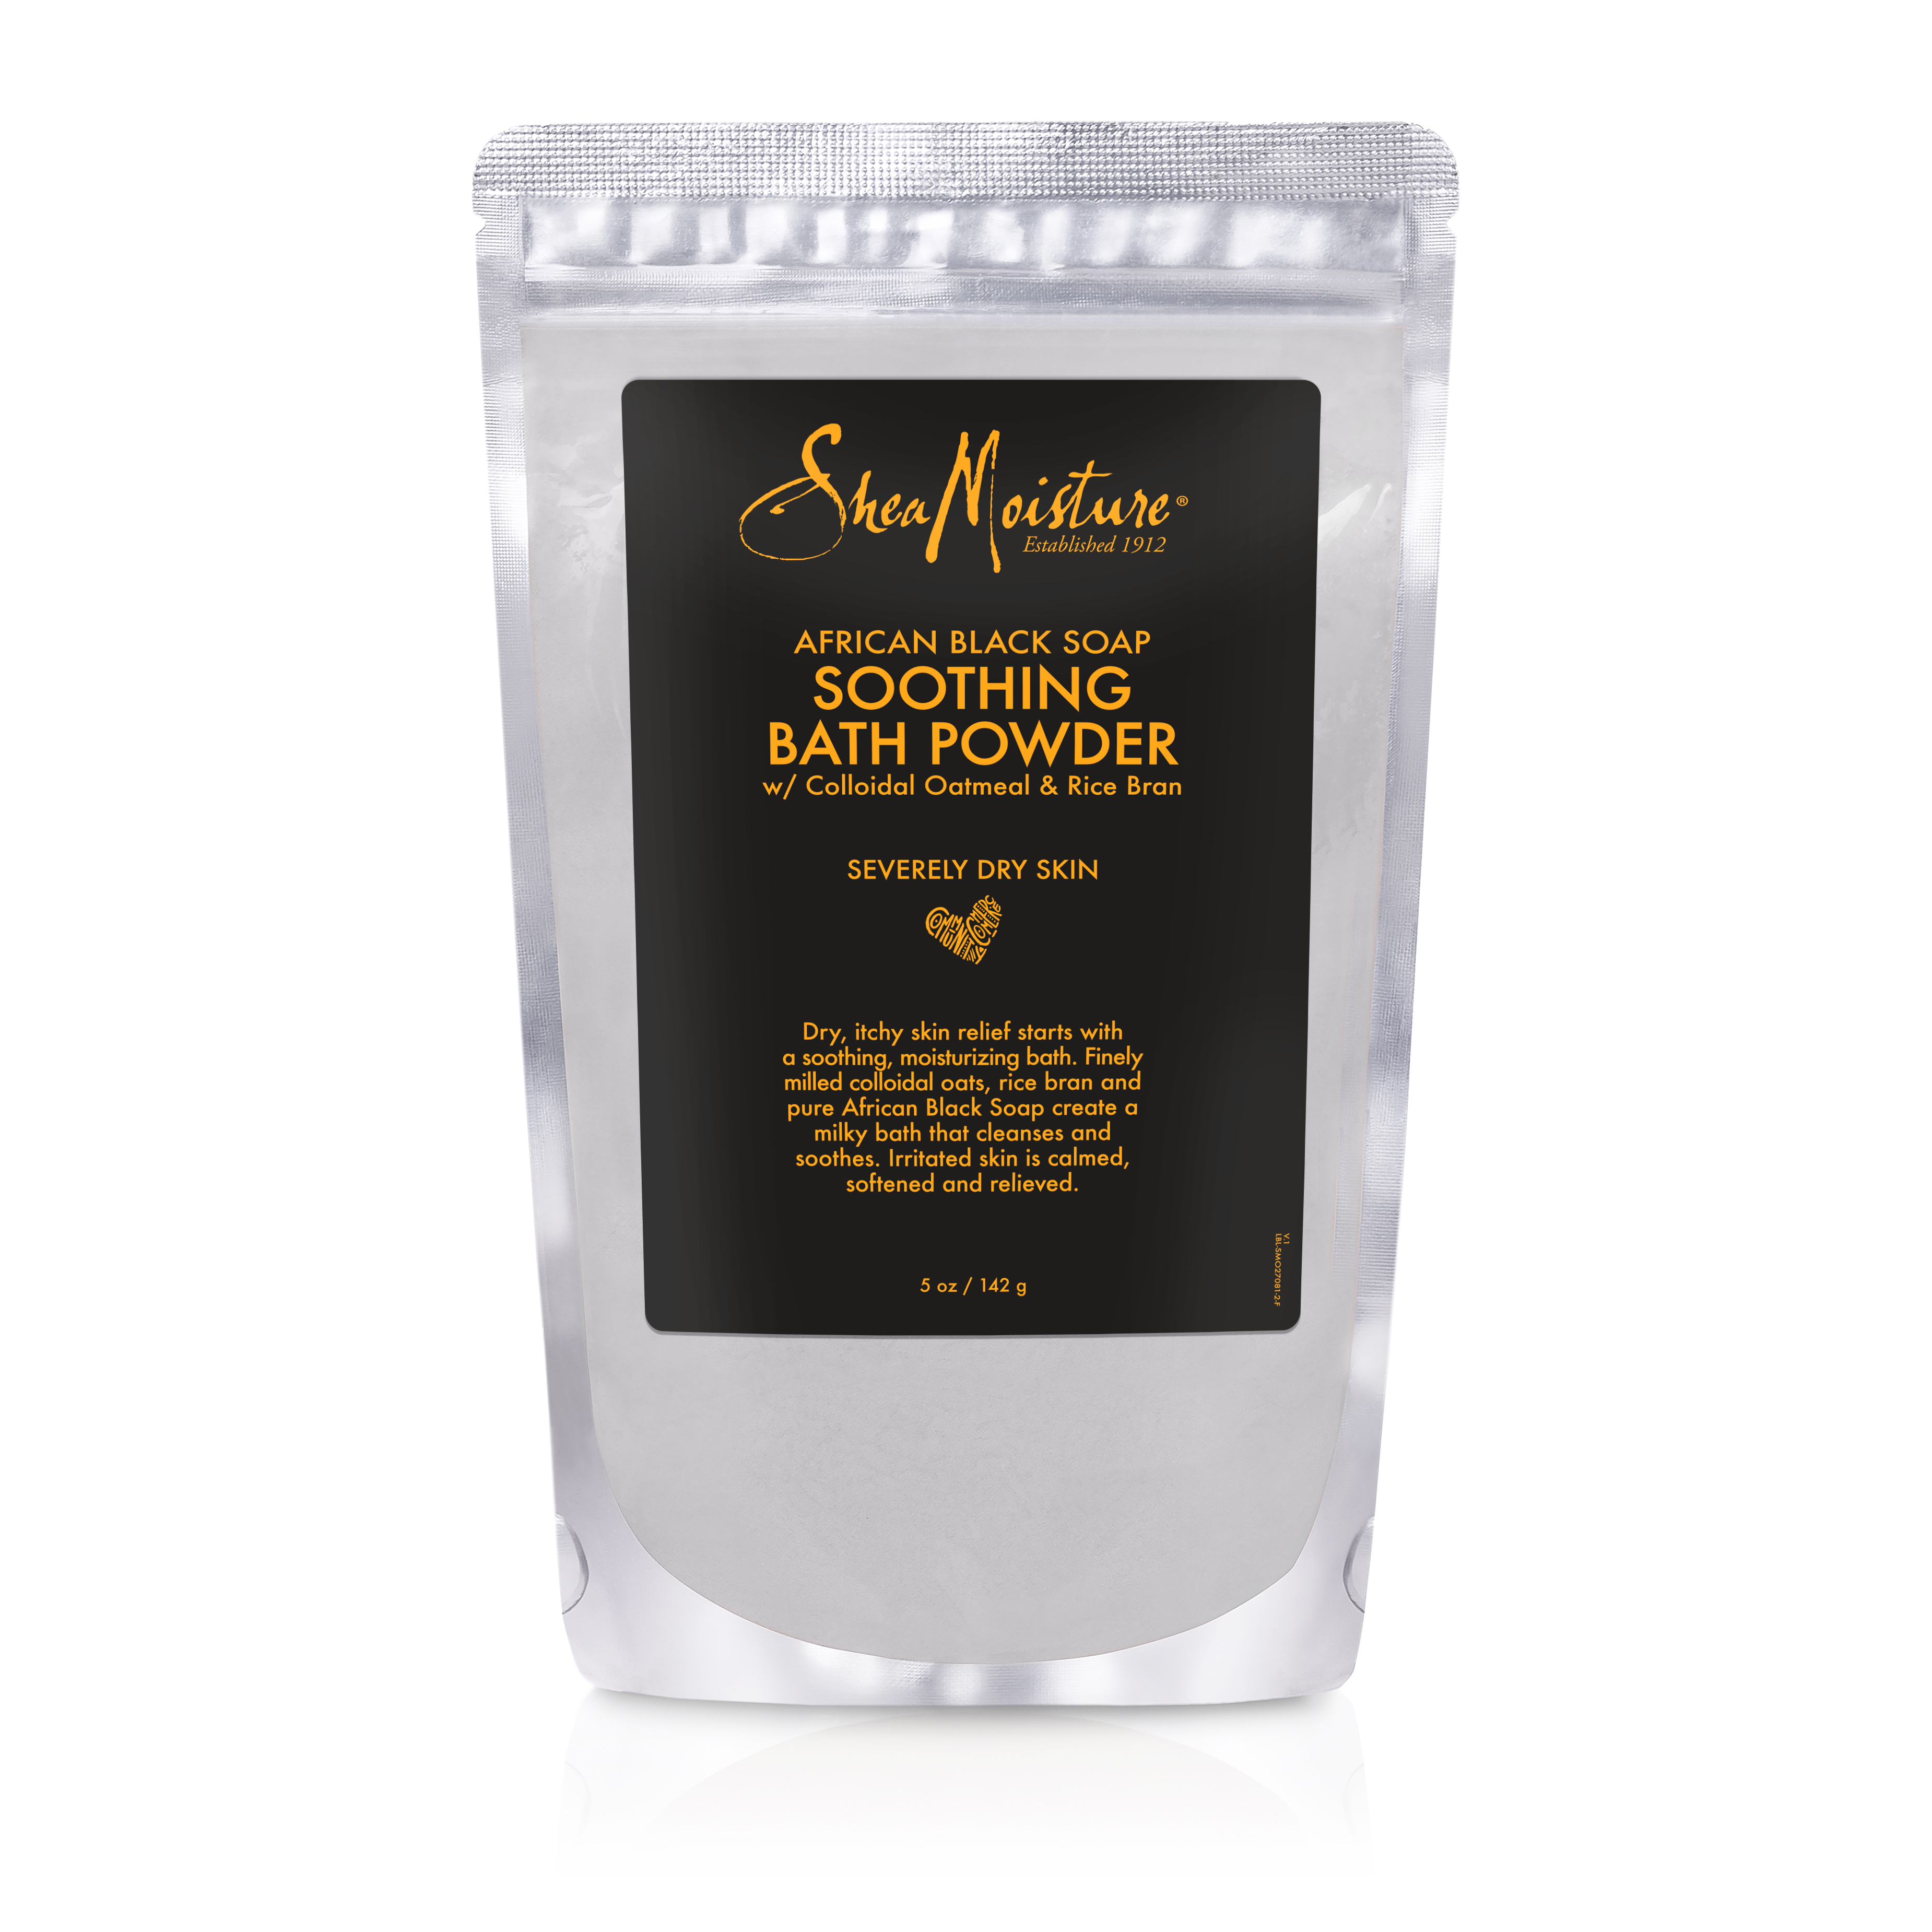 SheaMoisture African Black Soap Soothing Bath Powder